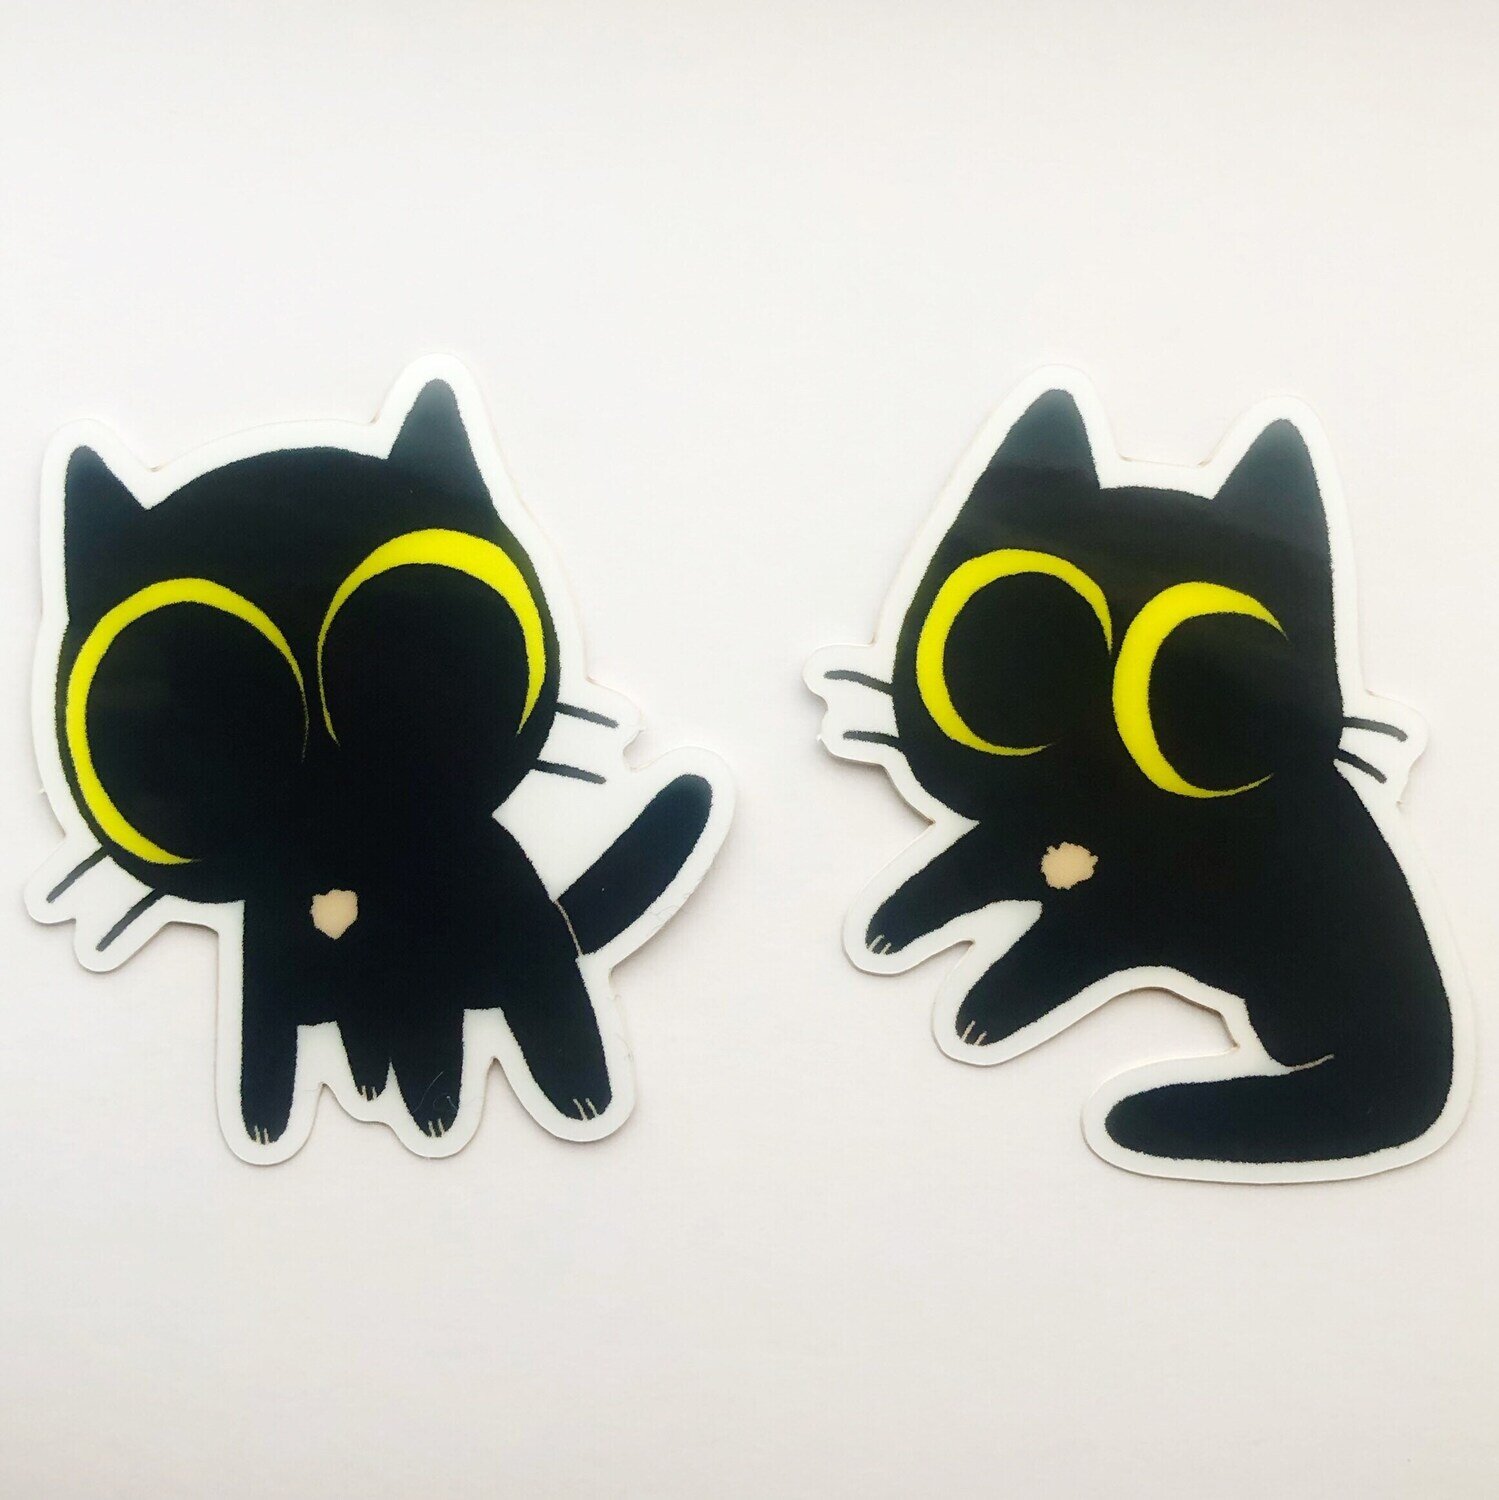 Mocha the little black kitten 2” vinyl stickers